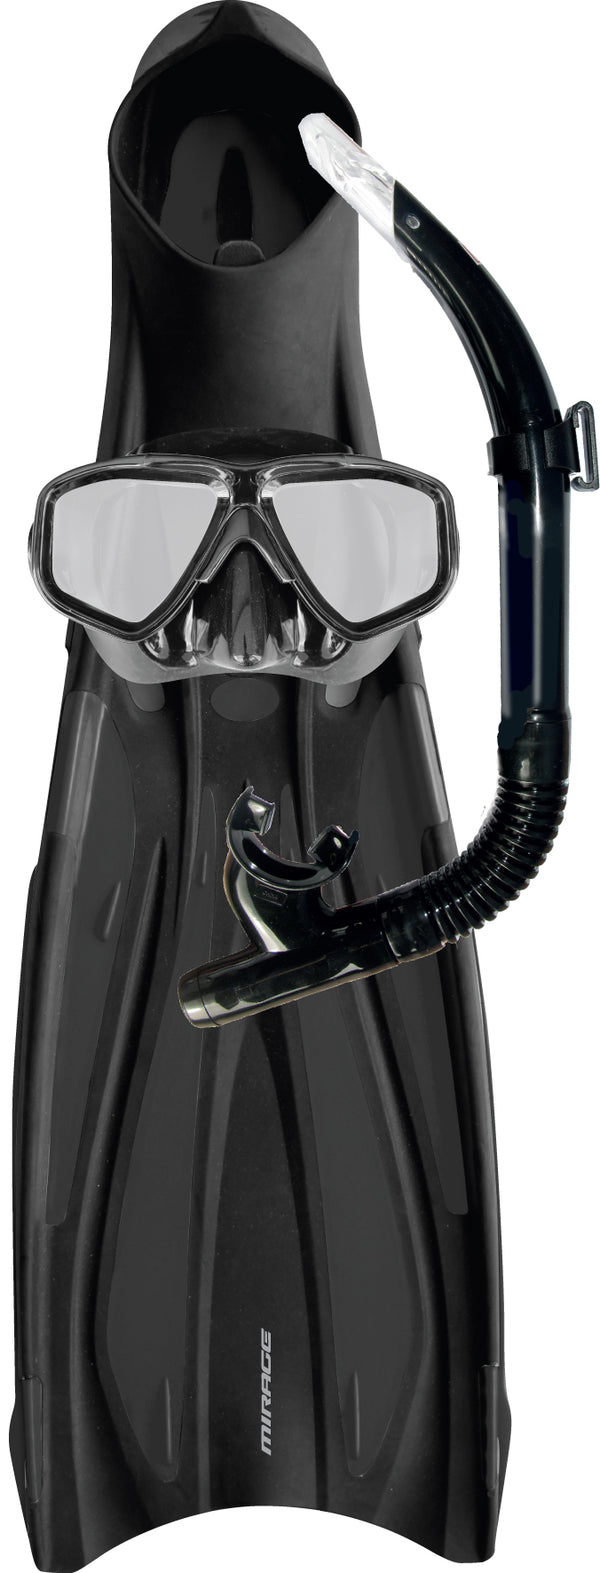 Mirage Barracuda Silicone Mask, Snorkel & Fin Set -Black - XL (Adult)